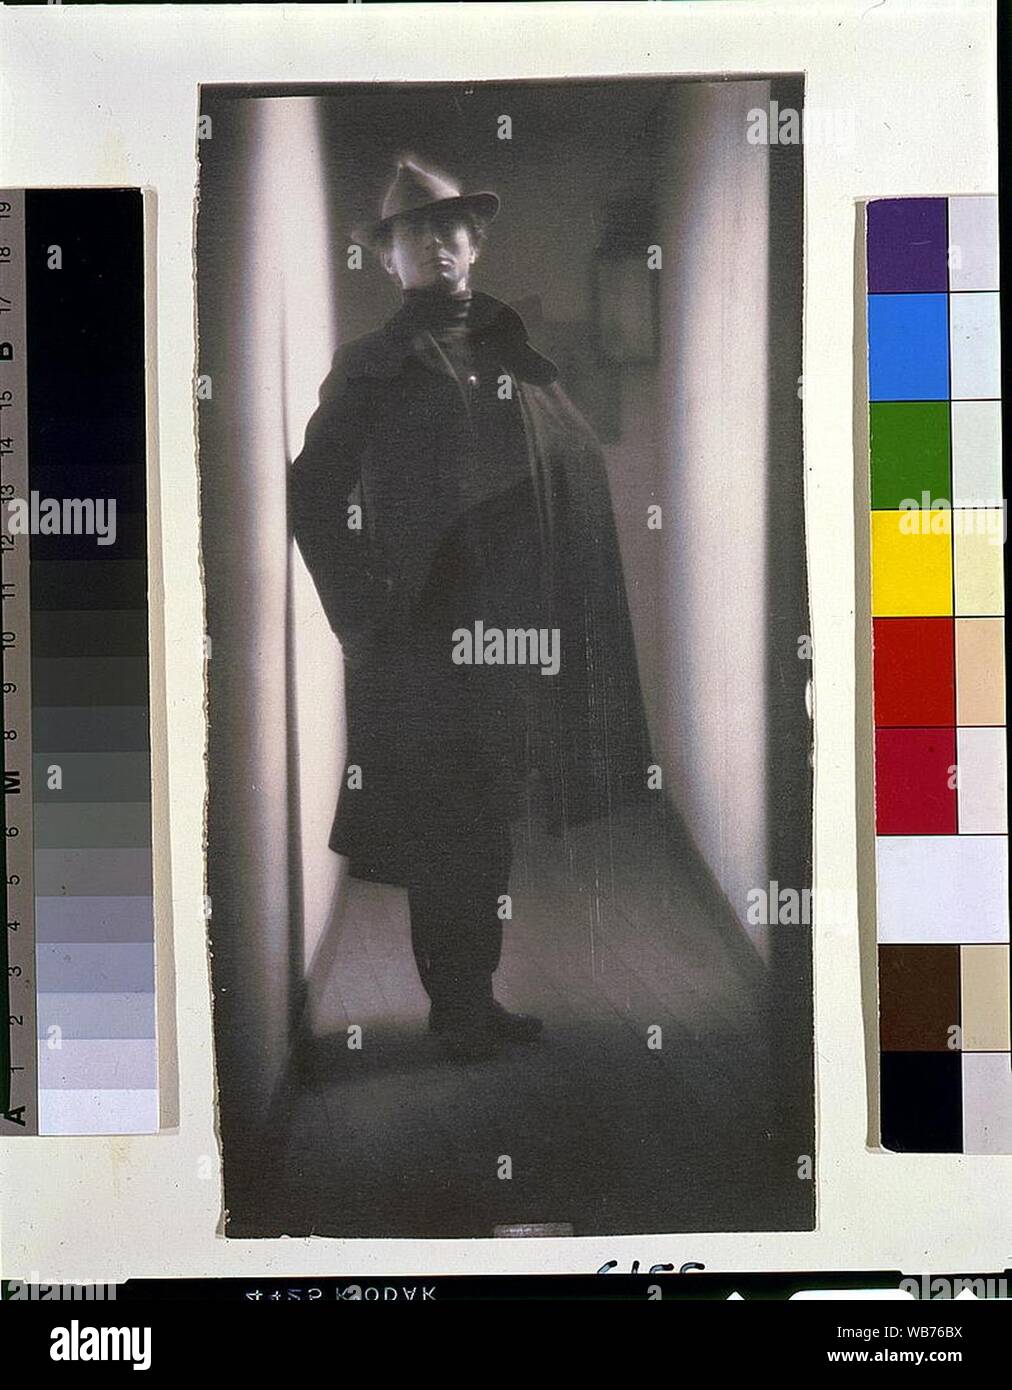 Edward Steichen, in coat and hat, standing in hallway, portrait Stock Photo